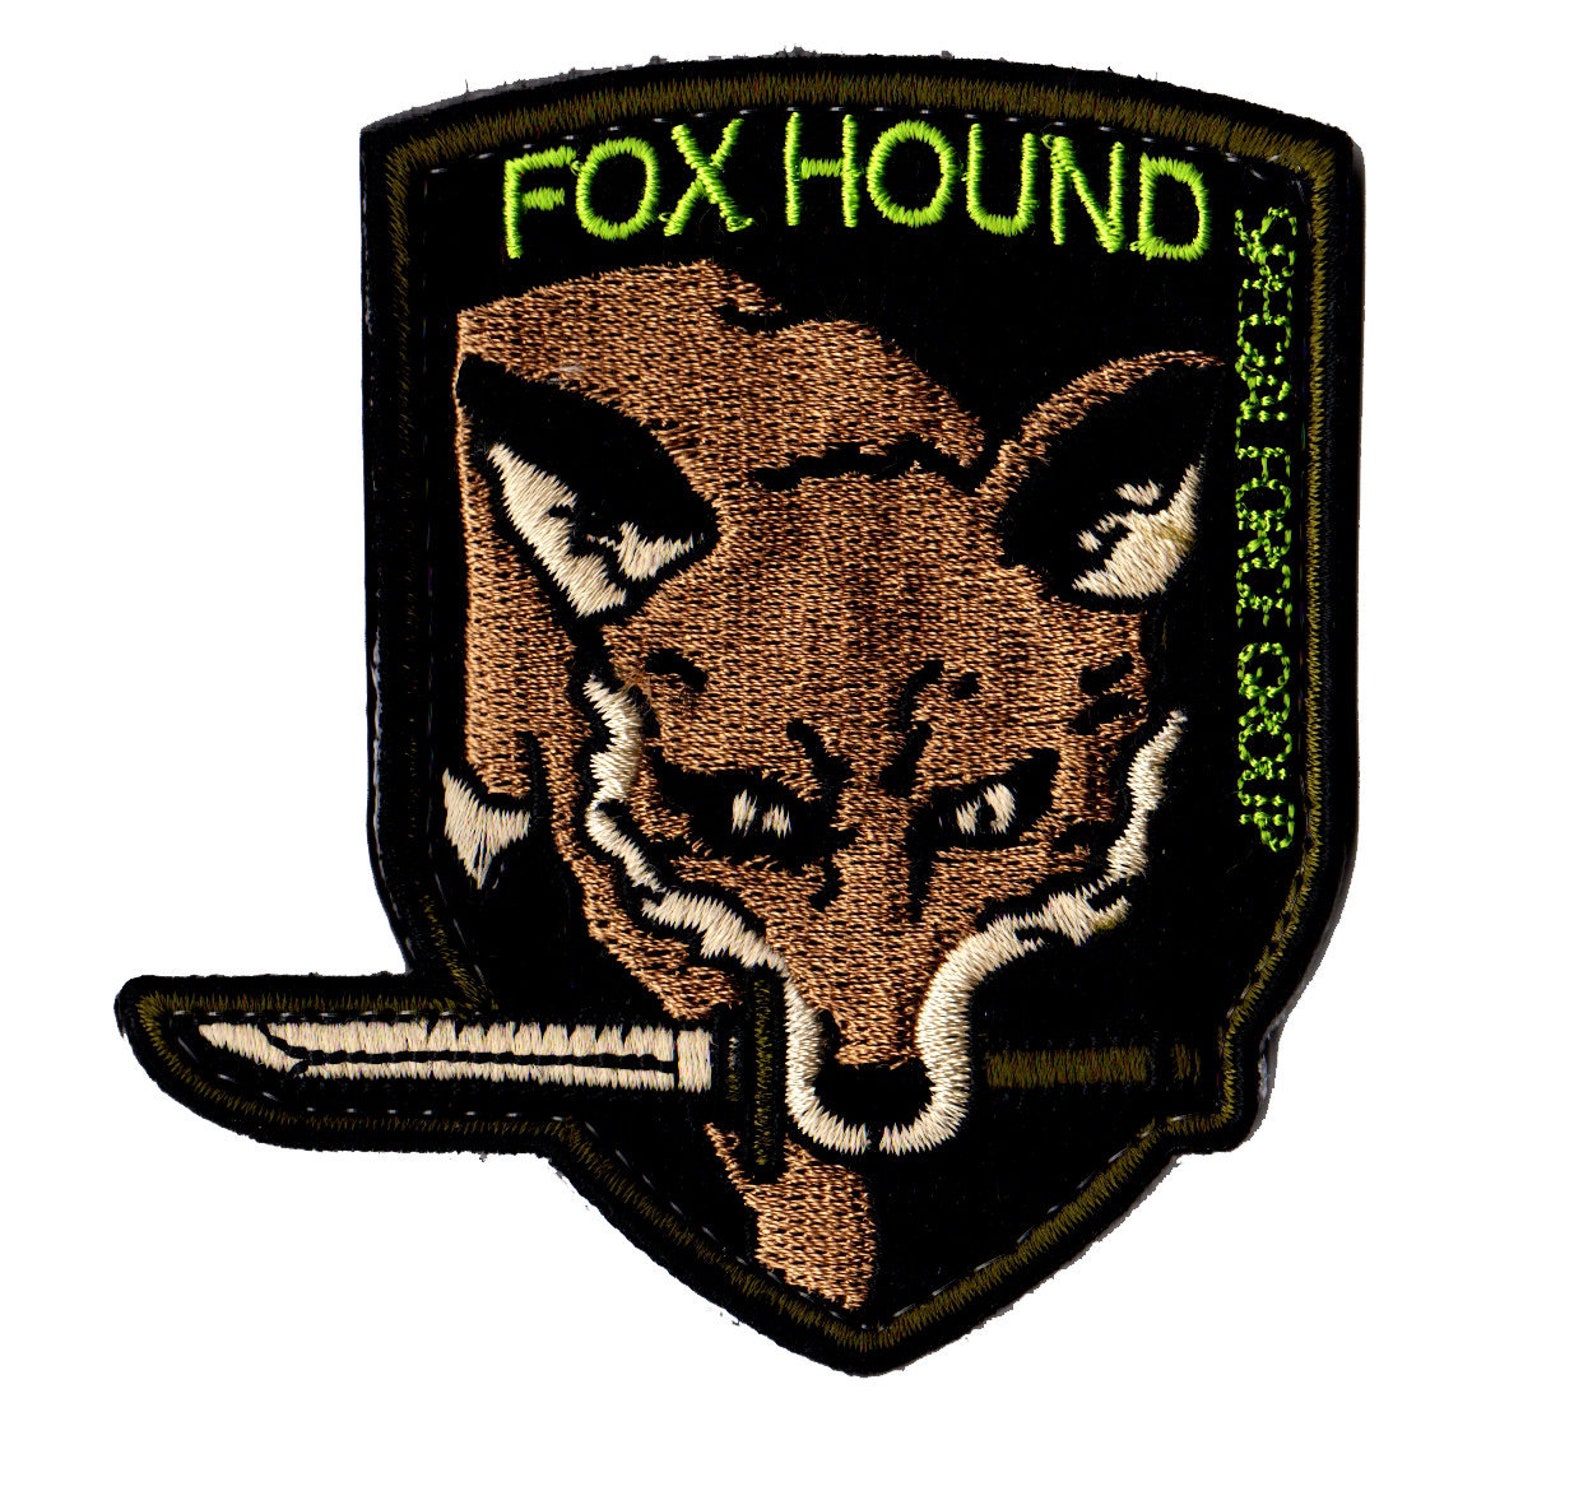 Fox hound. Foxhound Metal Gear нашивка. Metal Gear Solid Foxhound. Foxhound Шеврон. Нашивки Metal Gear Solid.